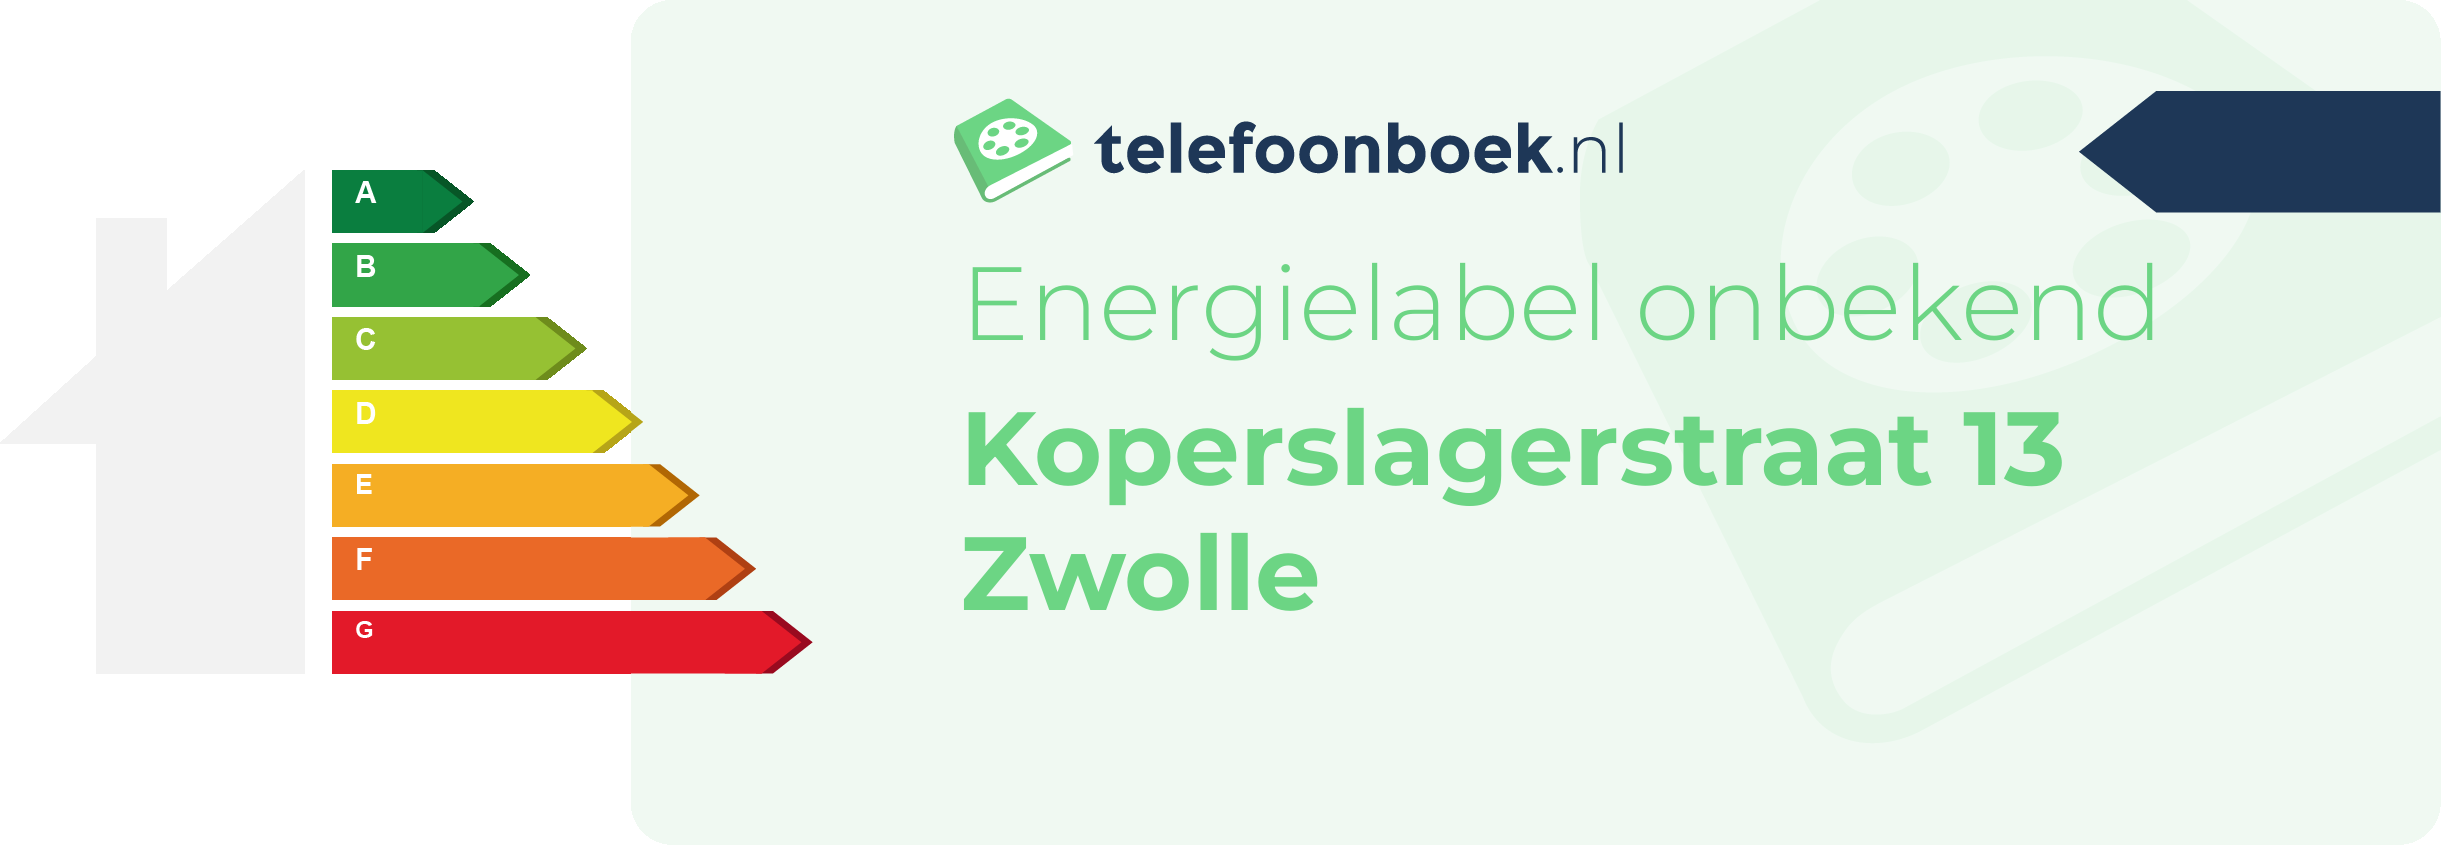 Energielabel Koperslagerstraat 13 Zwolle